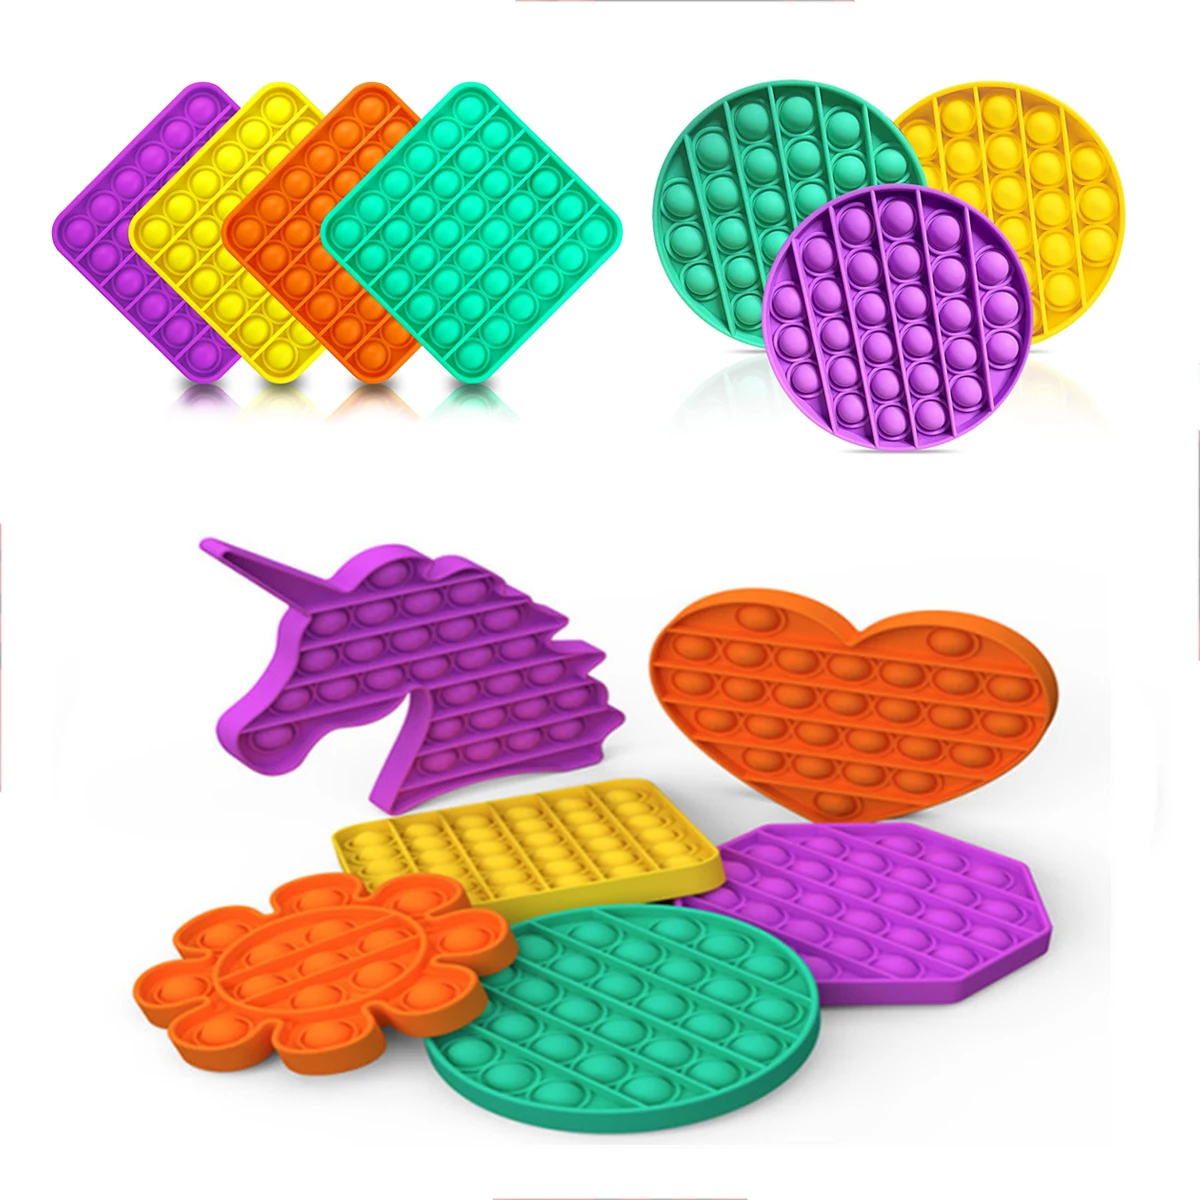 

push pop pop bubble ensory fidget toy,50 Pieces, Yellow, purple, green, orange